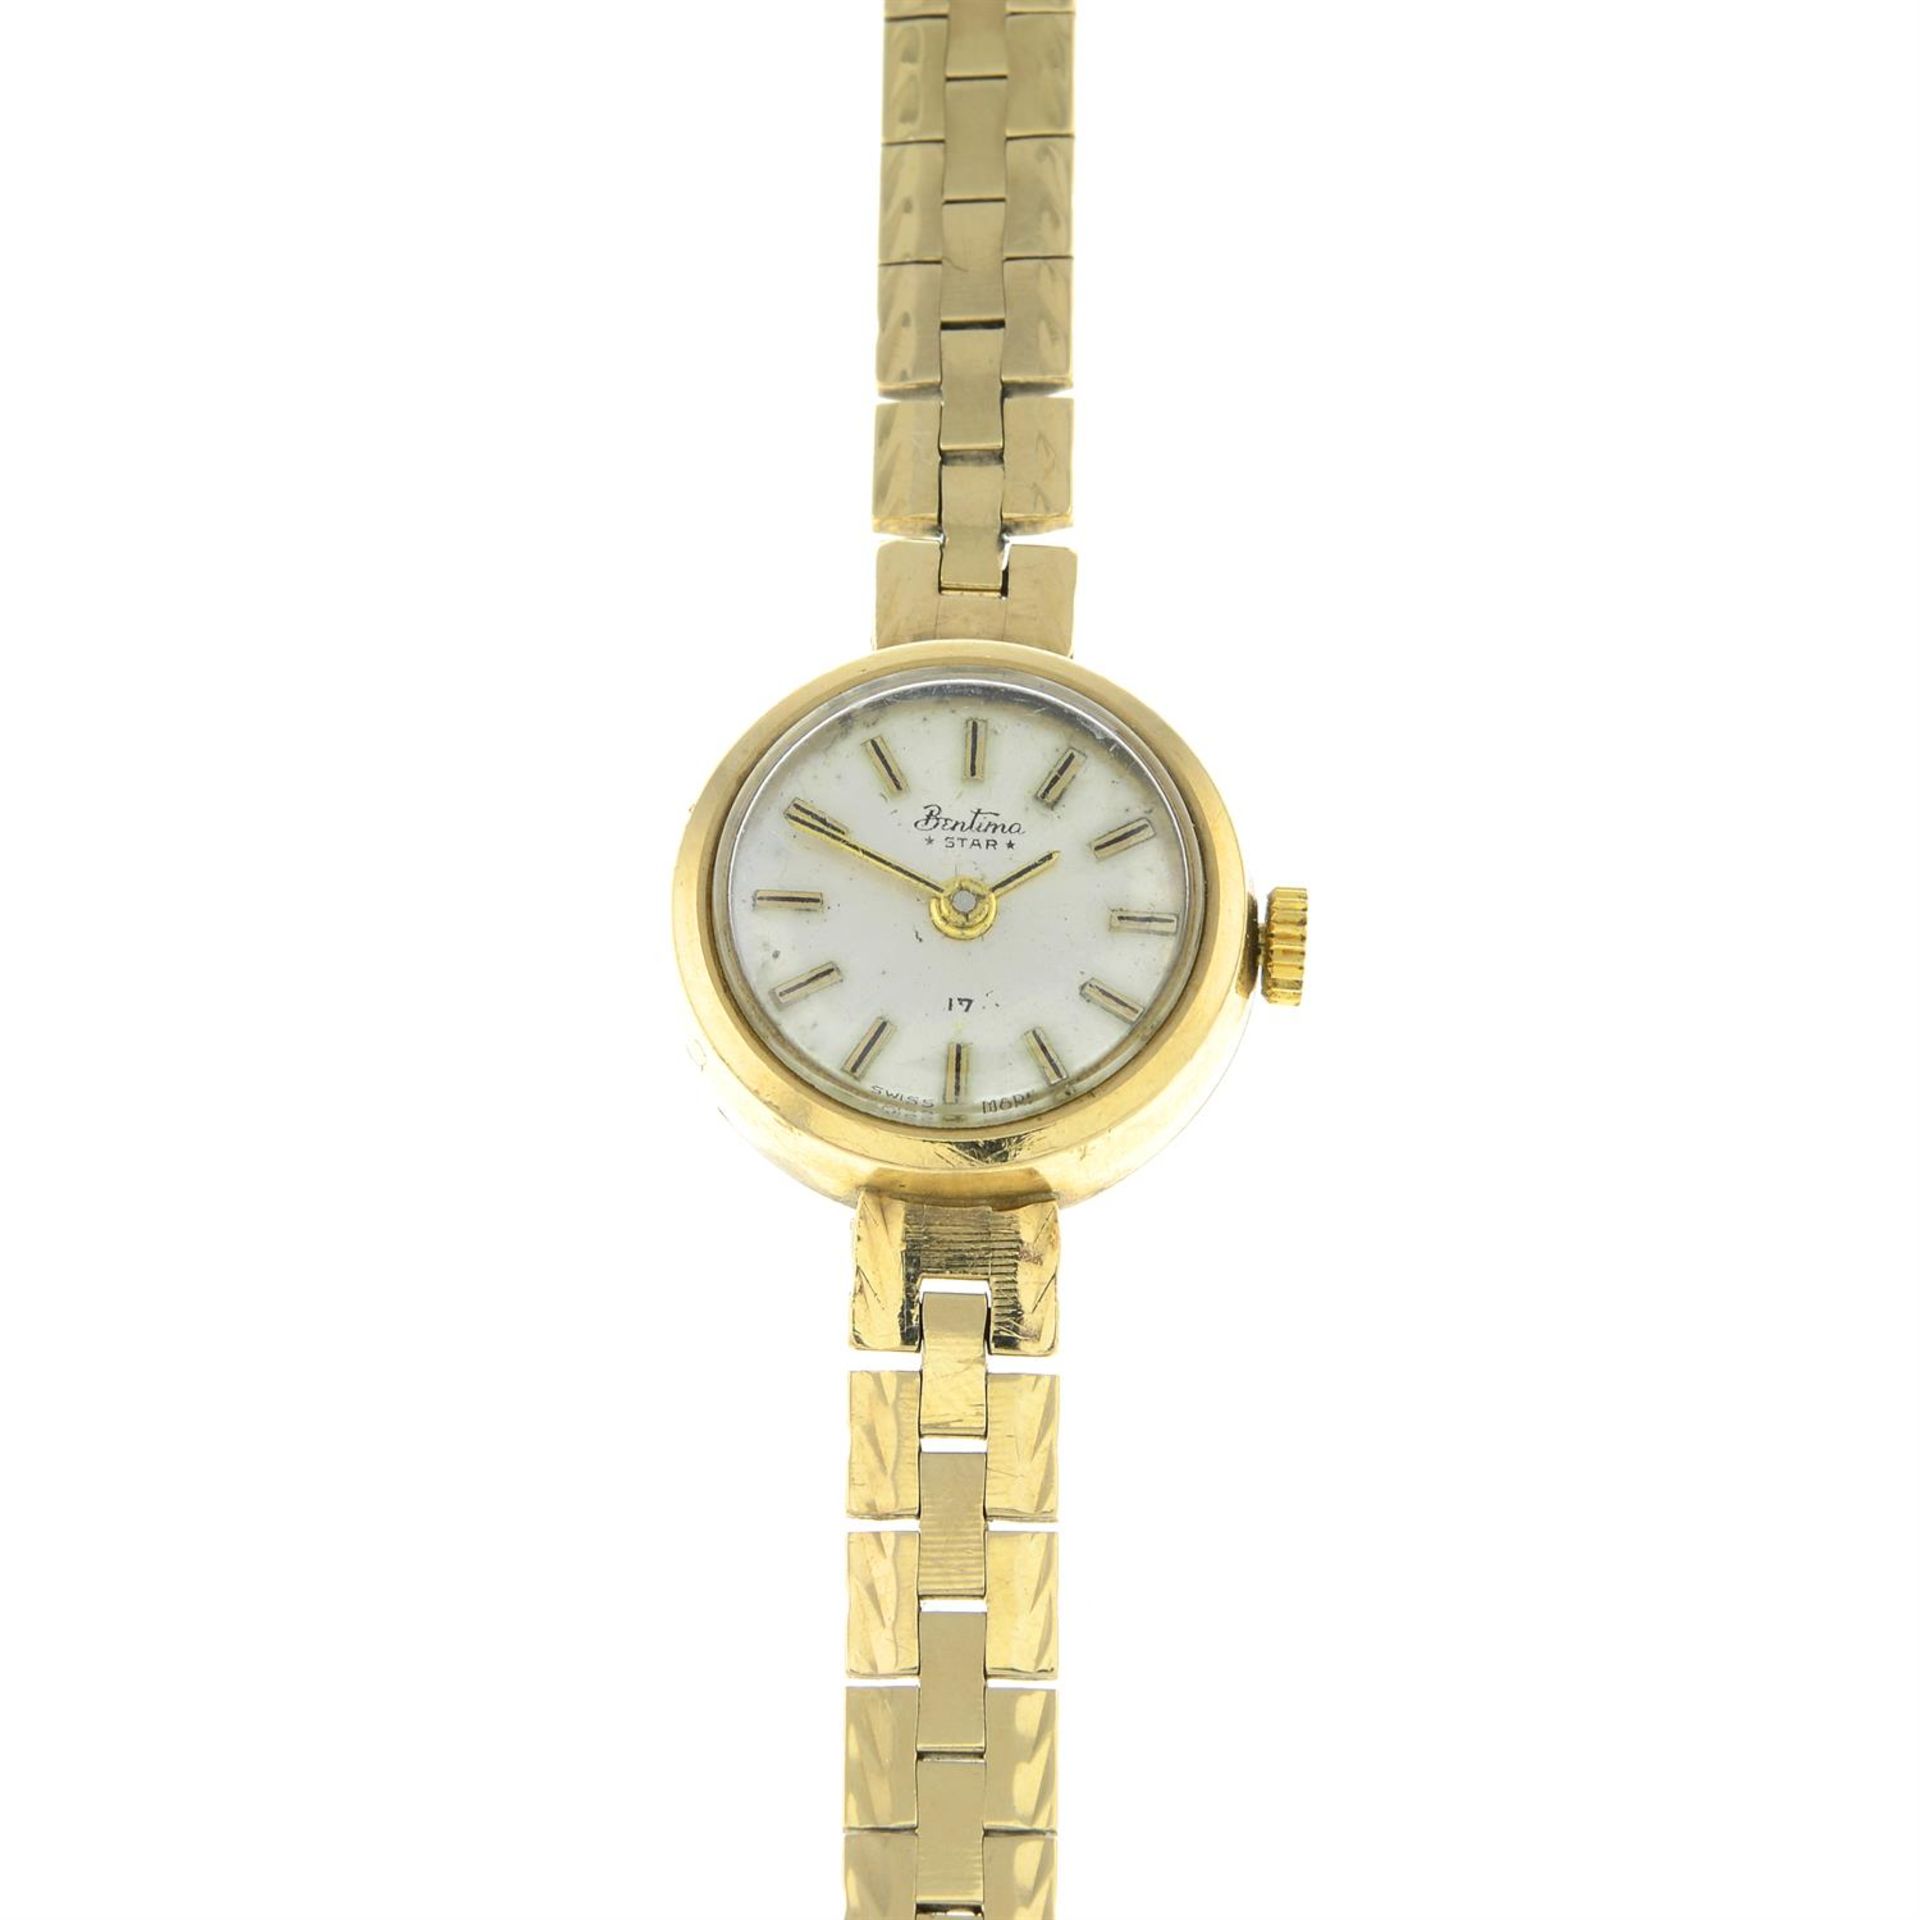 Lady's 9ct gold wrist watch.